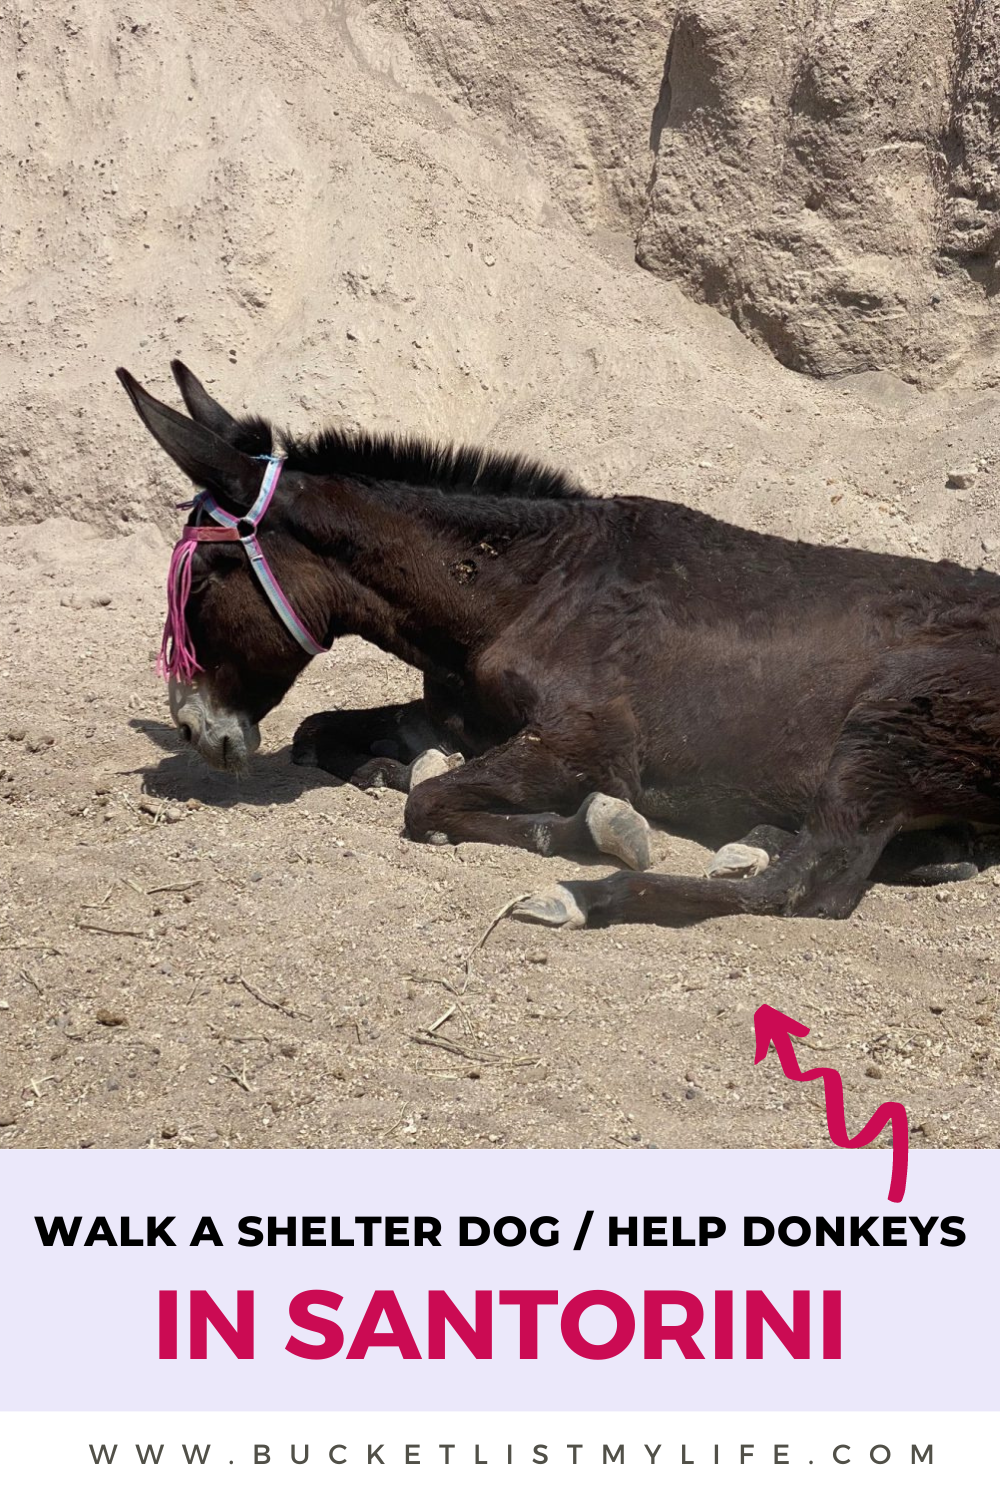 Santorini Dogs & Donkeys: Walk a Shelter Dog with SAWA